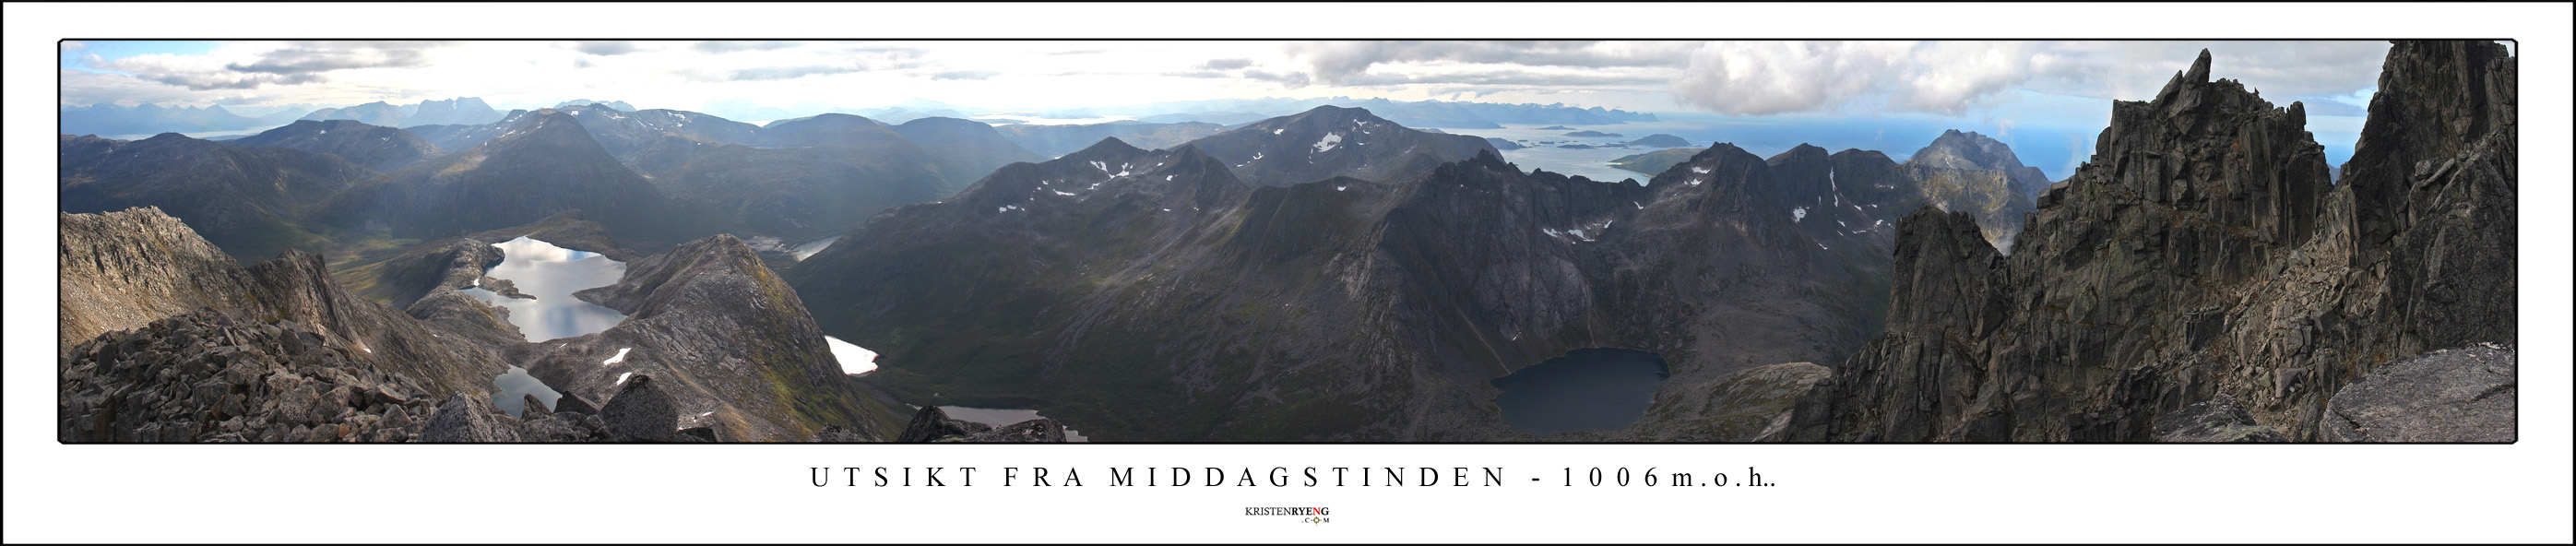 WEBMiddagstinden4.jpg - Utsikt fra Middagstinden på Kvaløya.